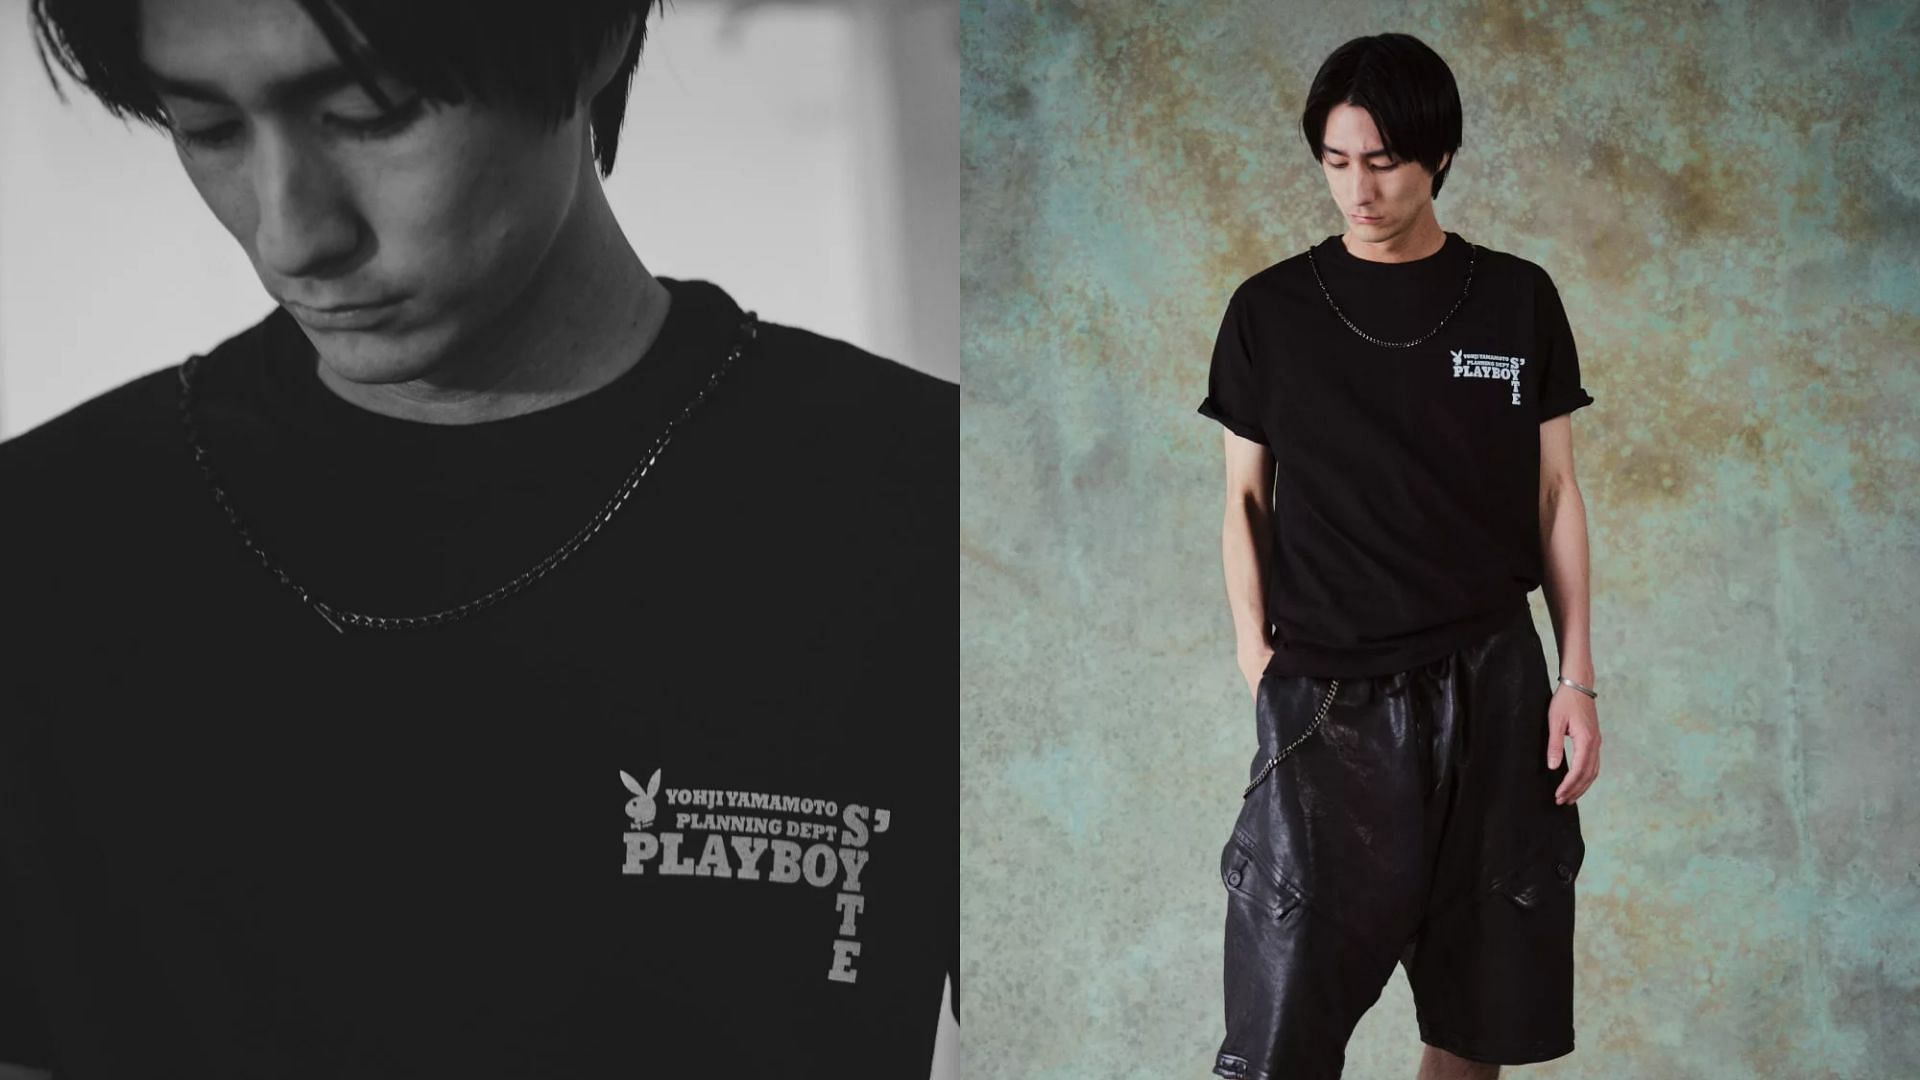 Yohji Yamamoto x Playboy apparel collection (Image via Yohji Yamamoto)